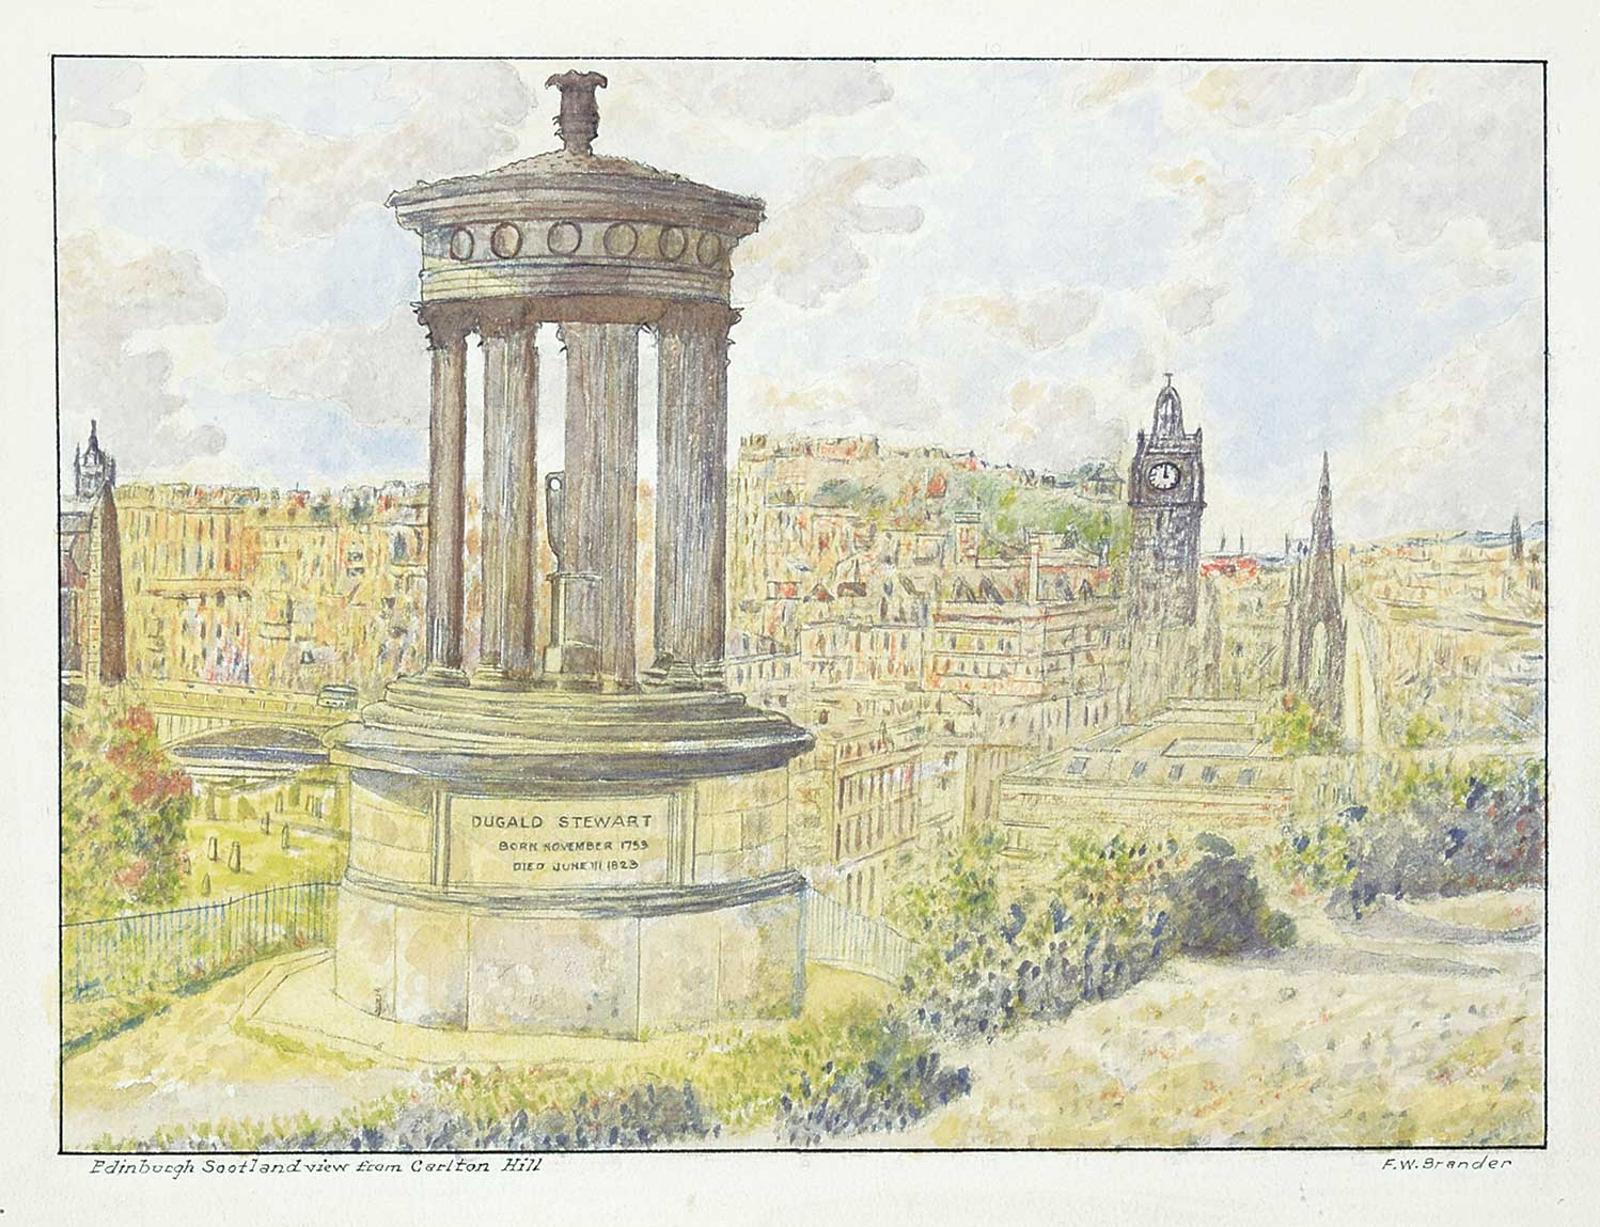 F. W. Brander - Edinburgh Scotland, View from Carleton Hill